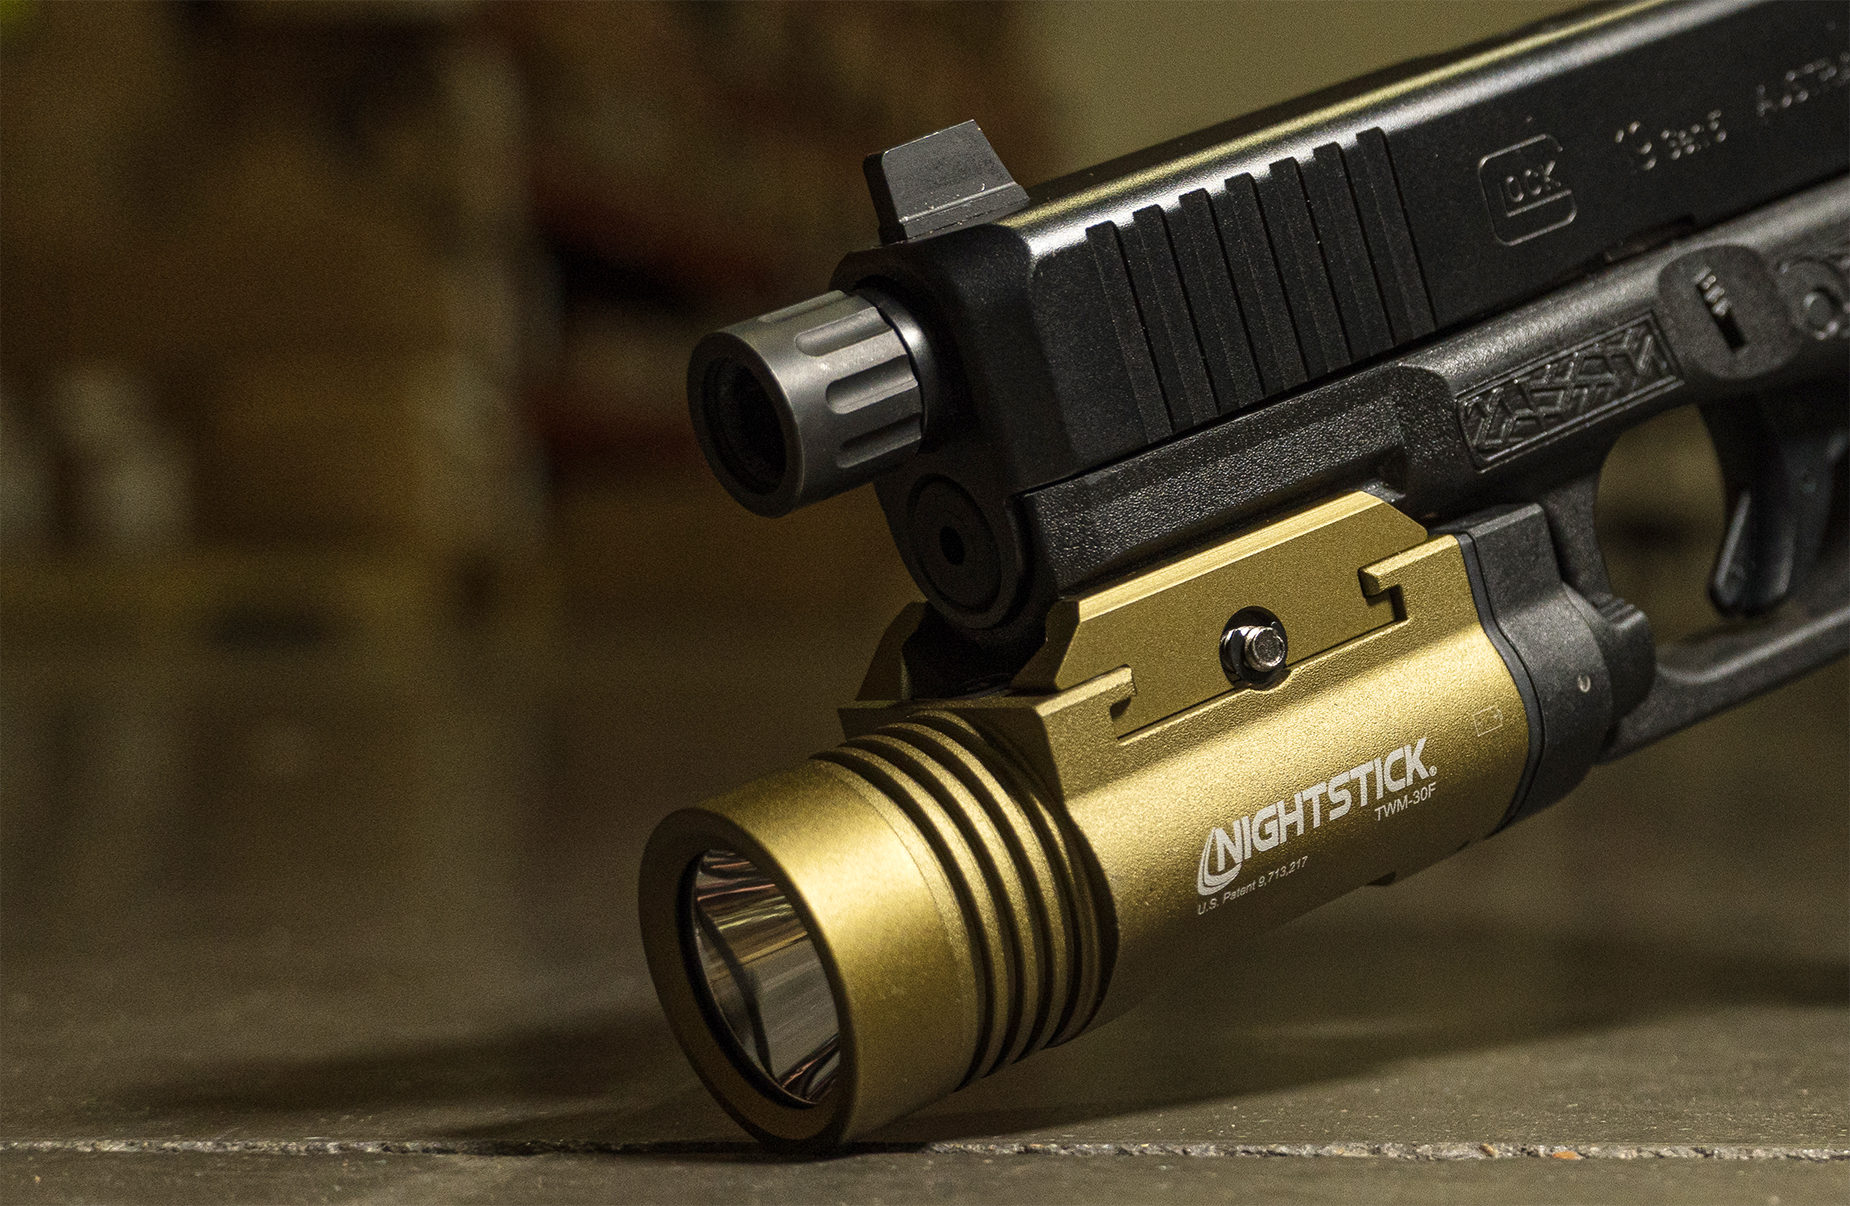 Nightstick TMW-30 pistol light in OD green